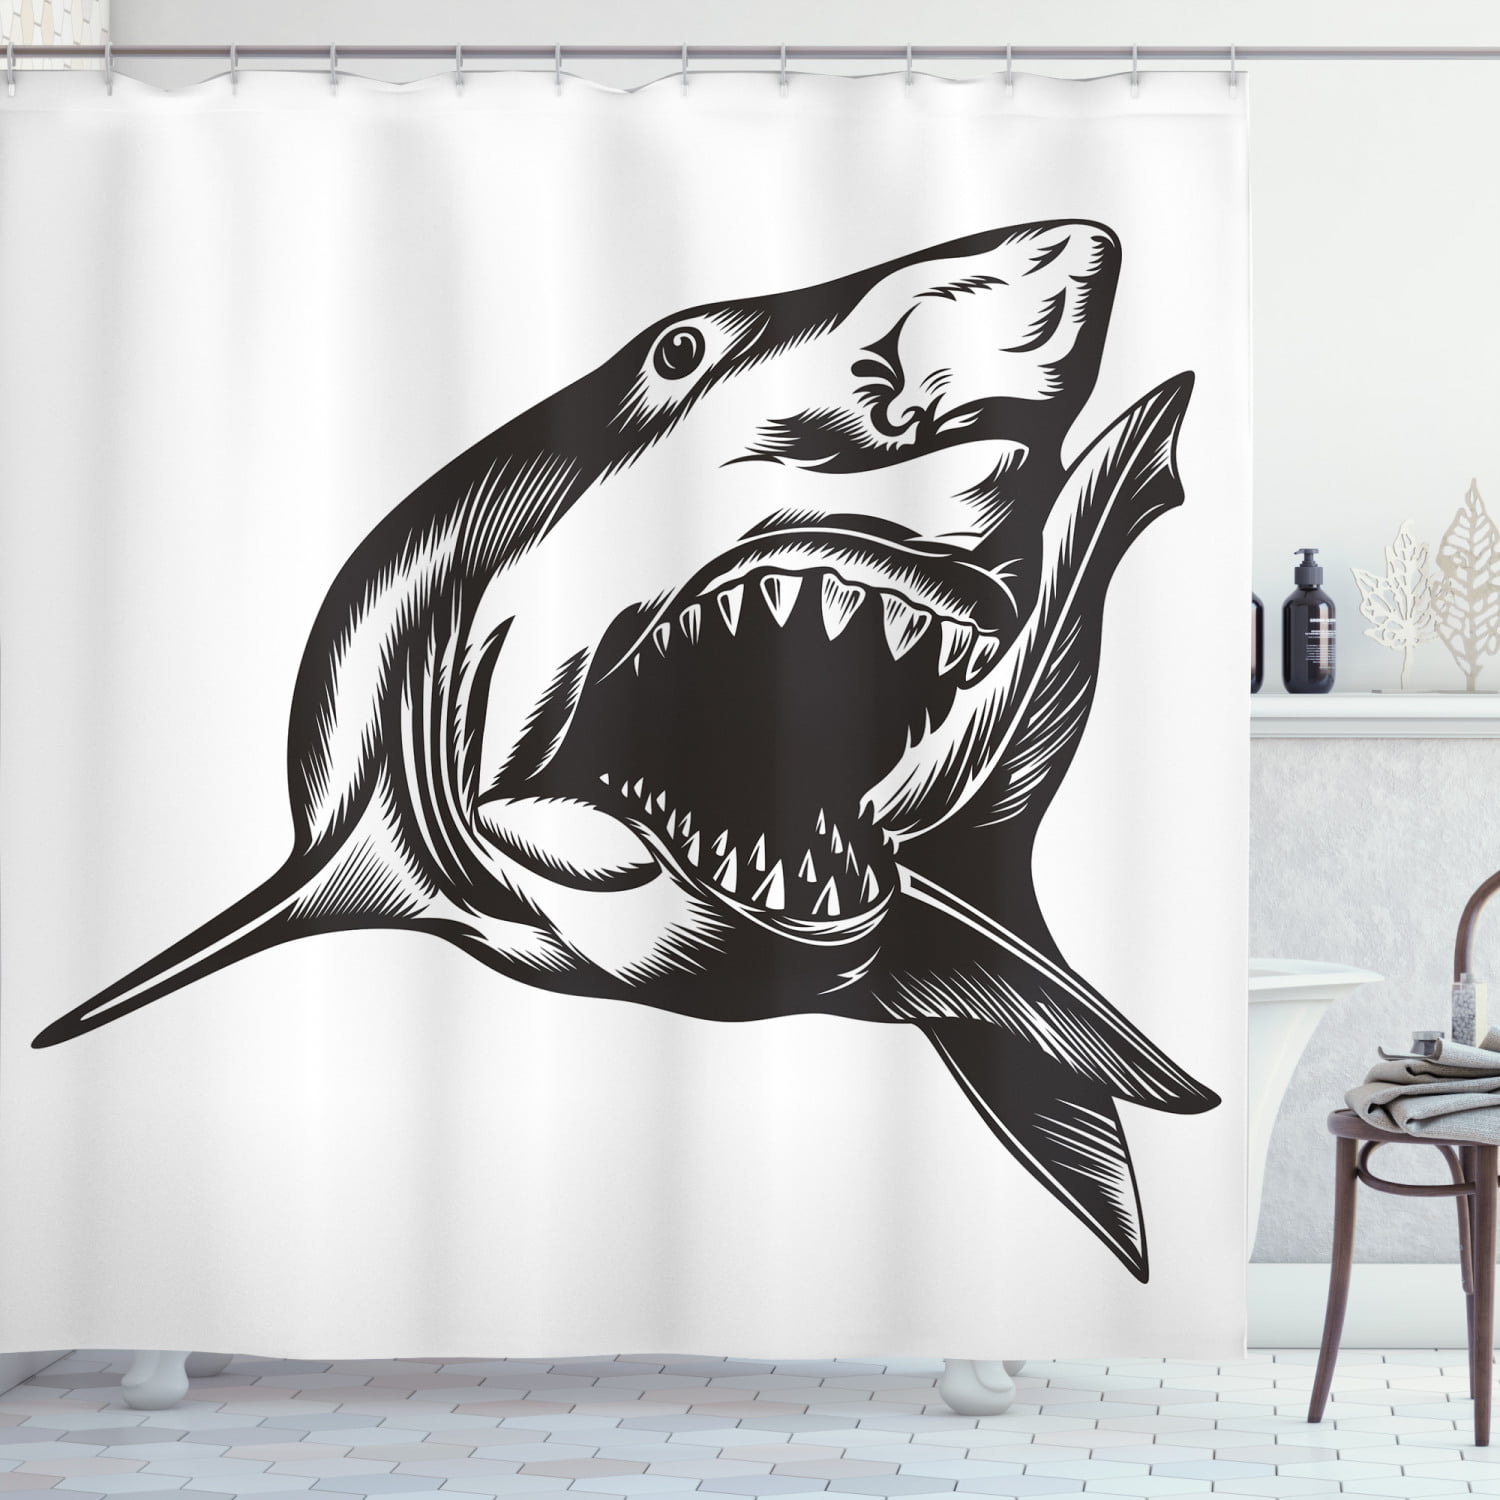 Rhino At Night Wild Animal Bathroom Fabric Shower Curtain & 12 Hooks 71x71 inch 